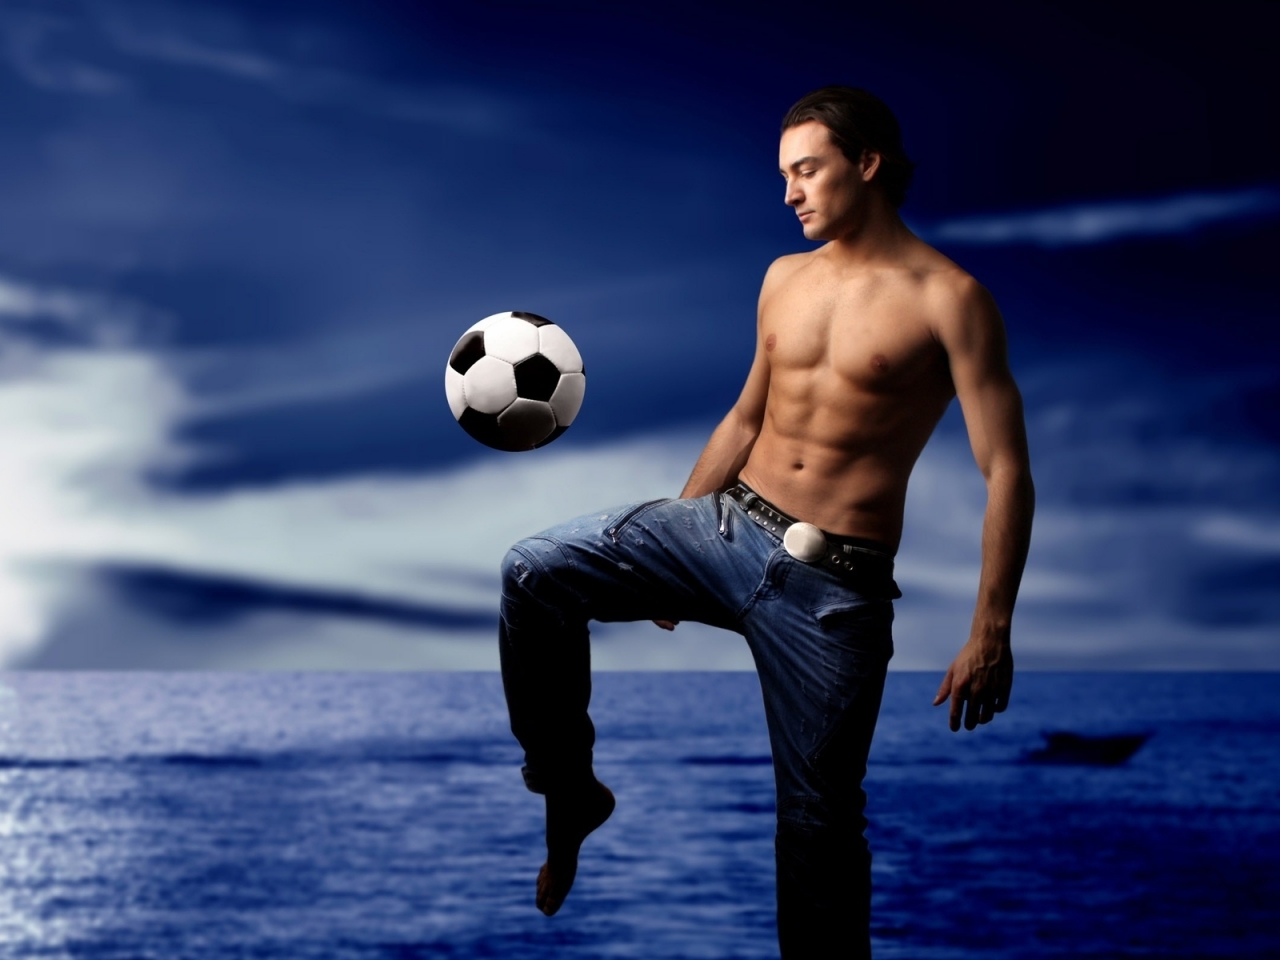 Soccer Ball for 1280 x 960 resolution